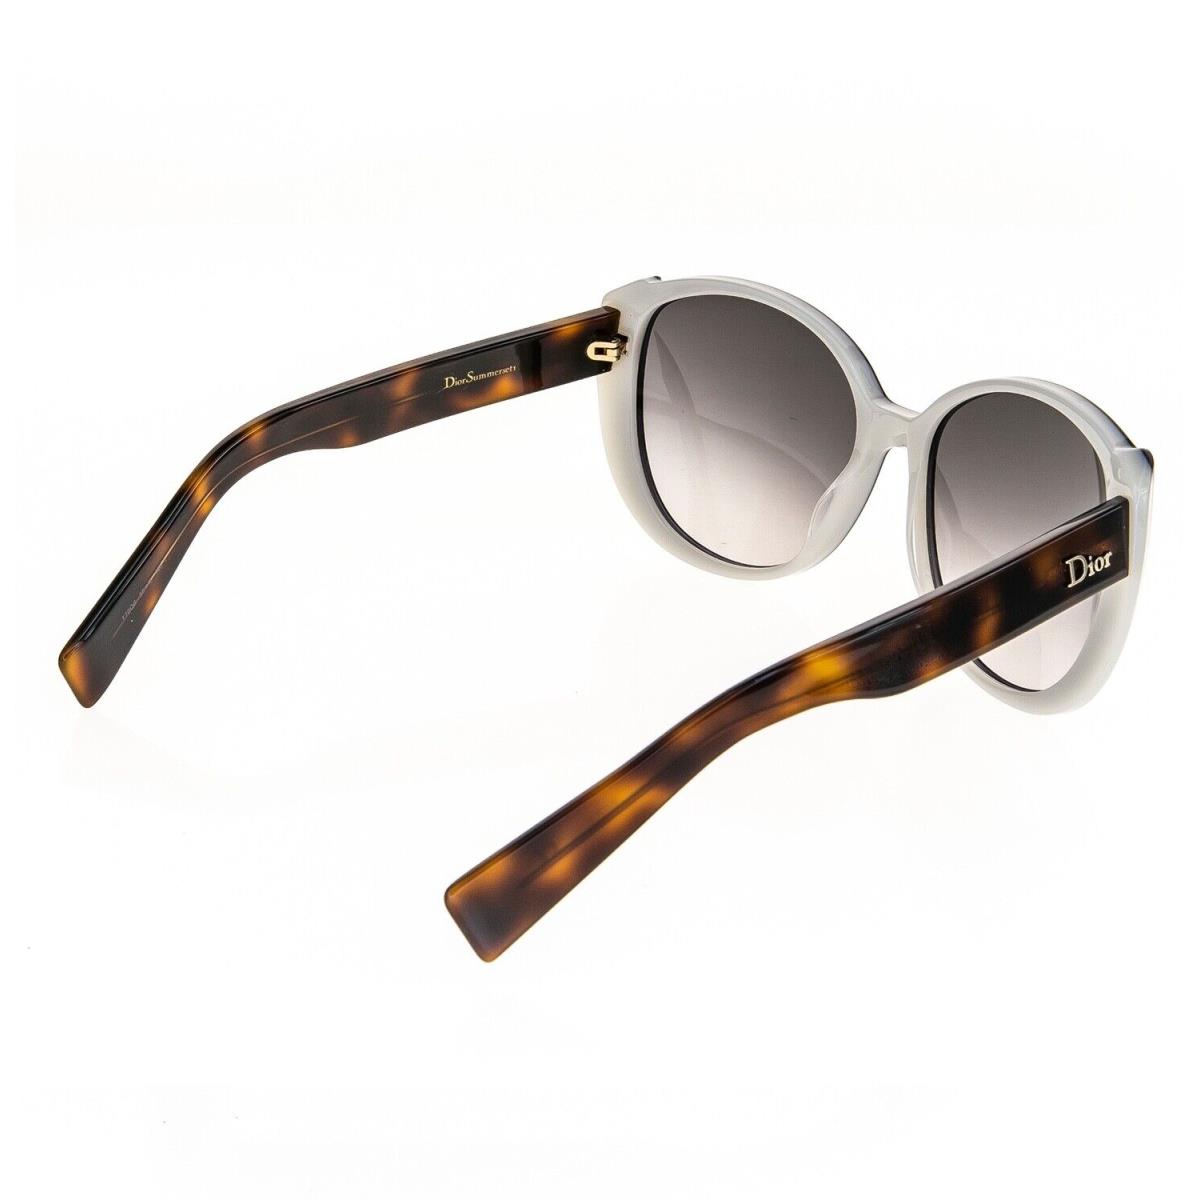 Dior sunglasses  - Frame: Brown, Lens: Gray